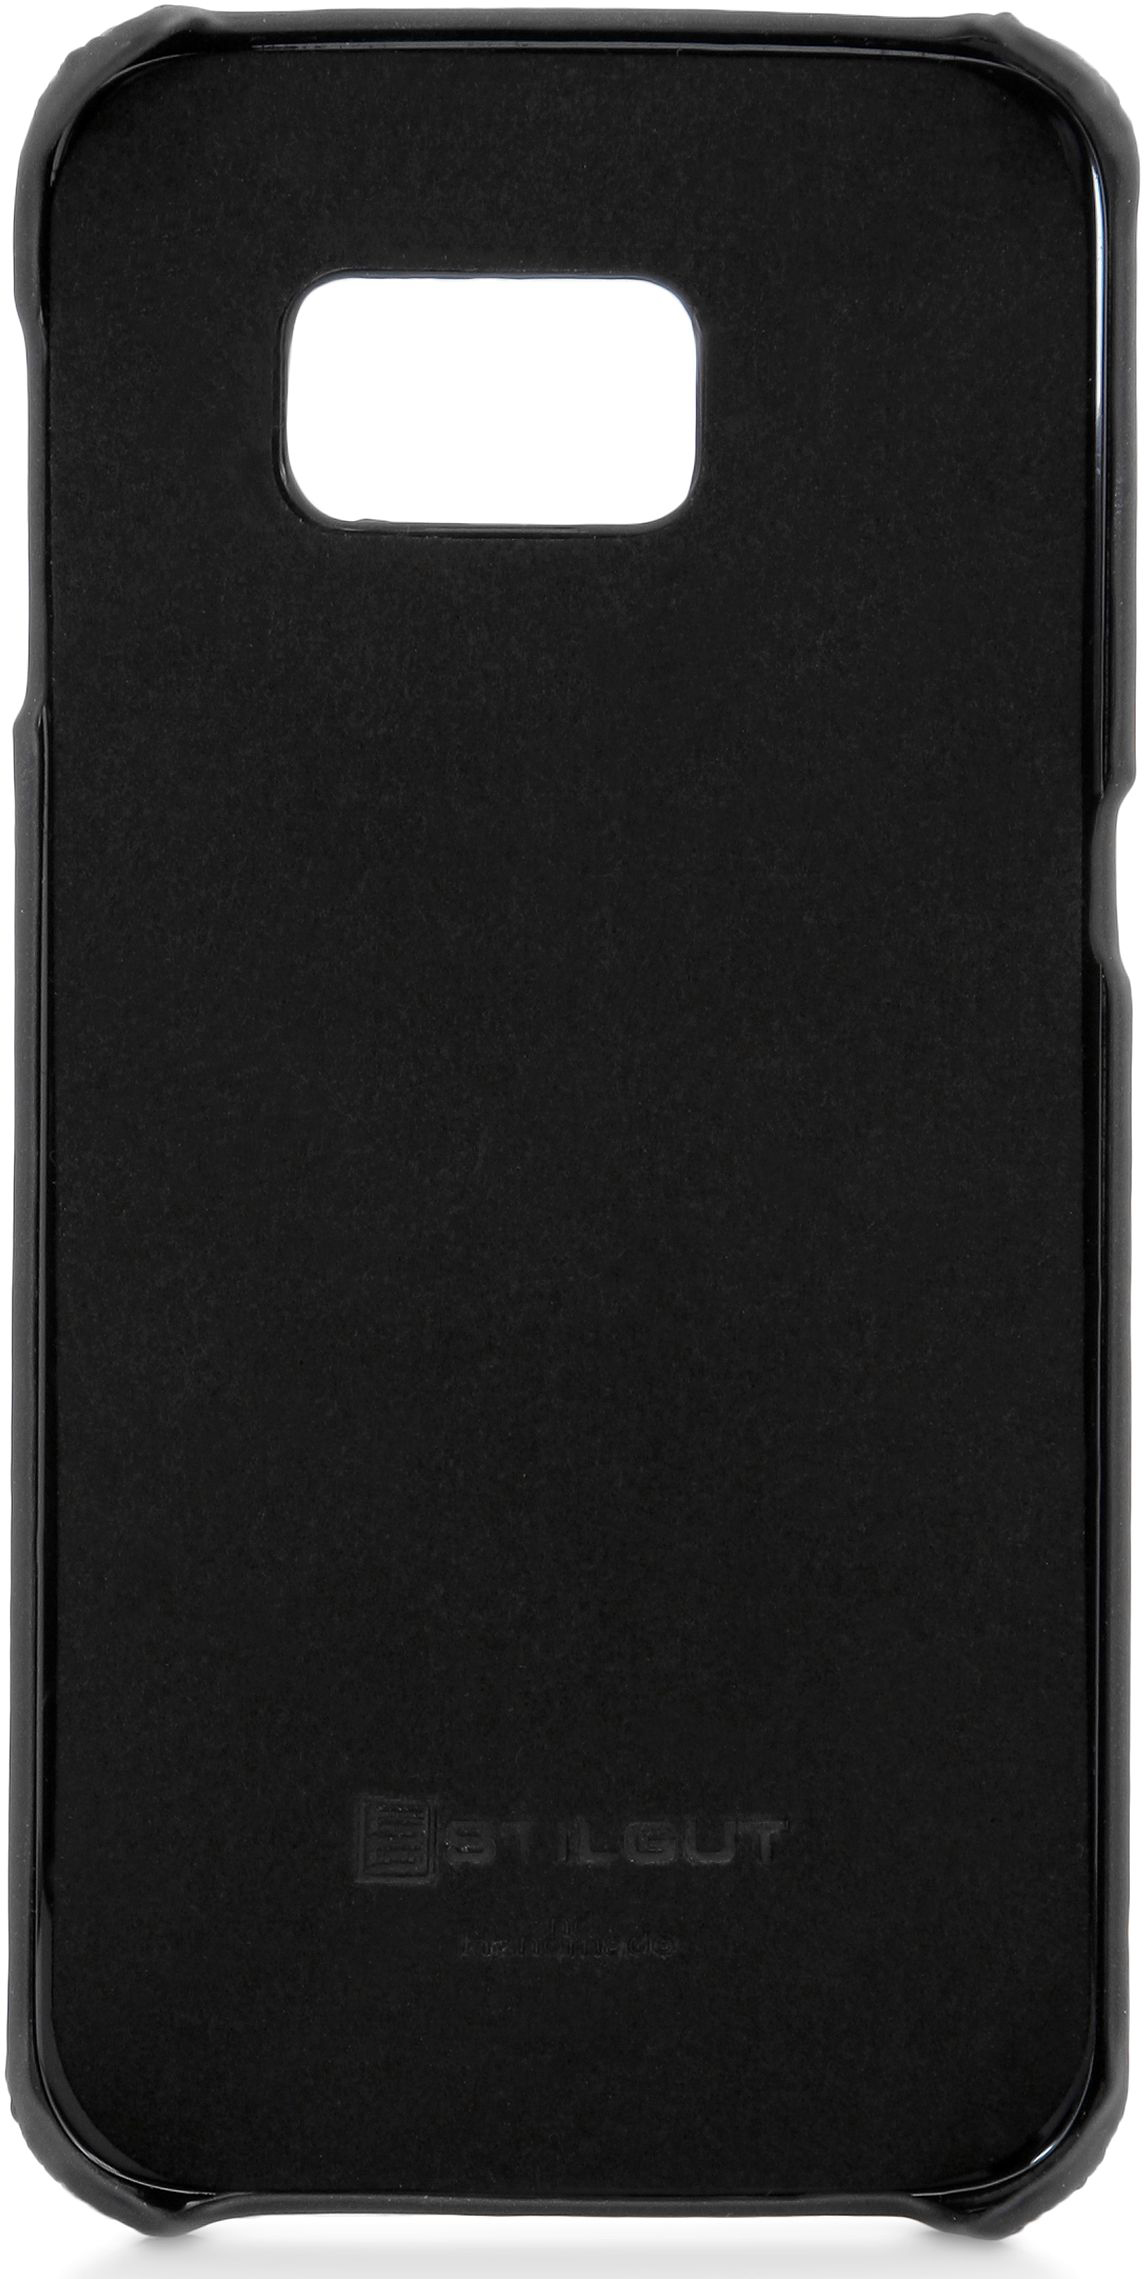 Samsung galaxy s6 edge folio fitted case Claret Red ultra slim premium leather samsung s6edge case